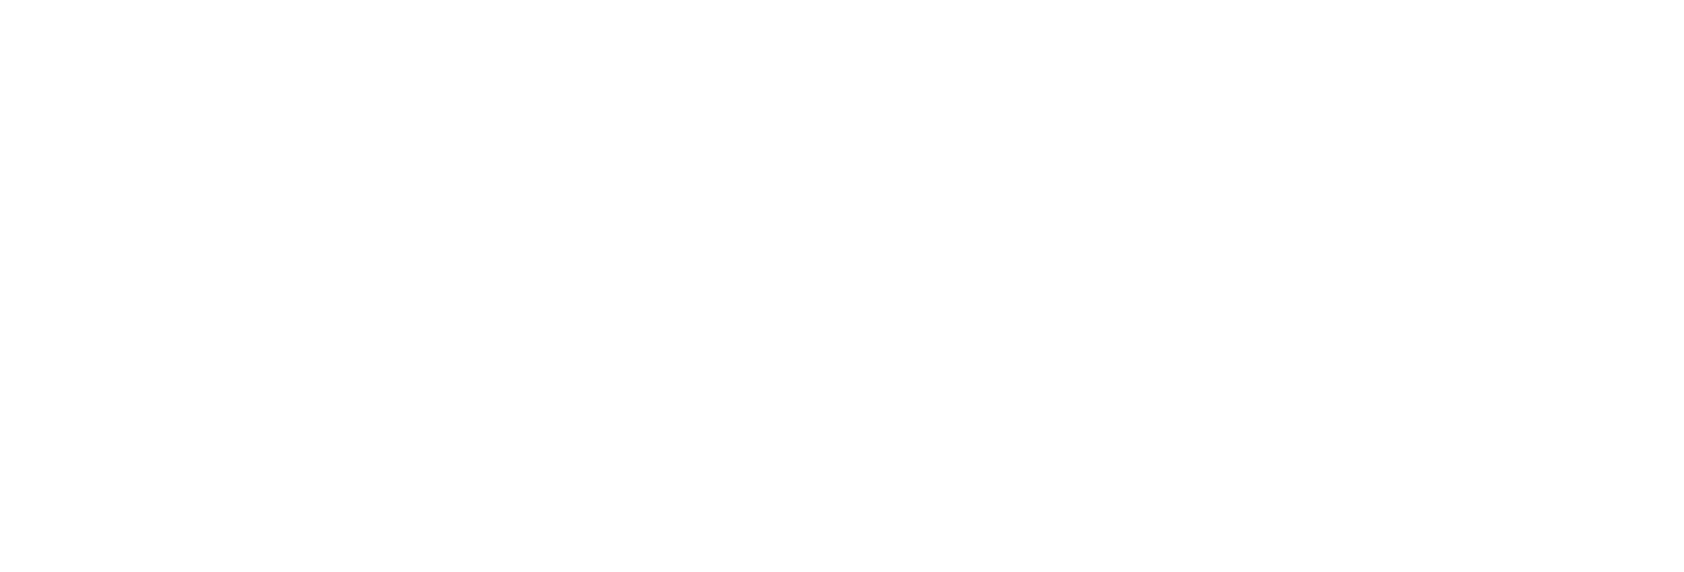 Mermaid Family Practice